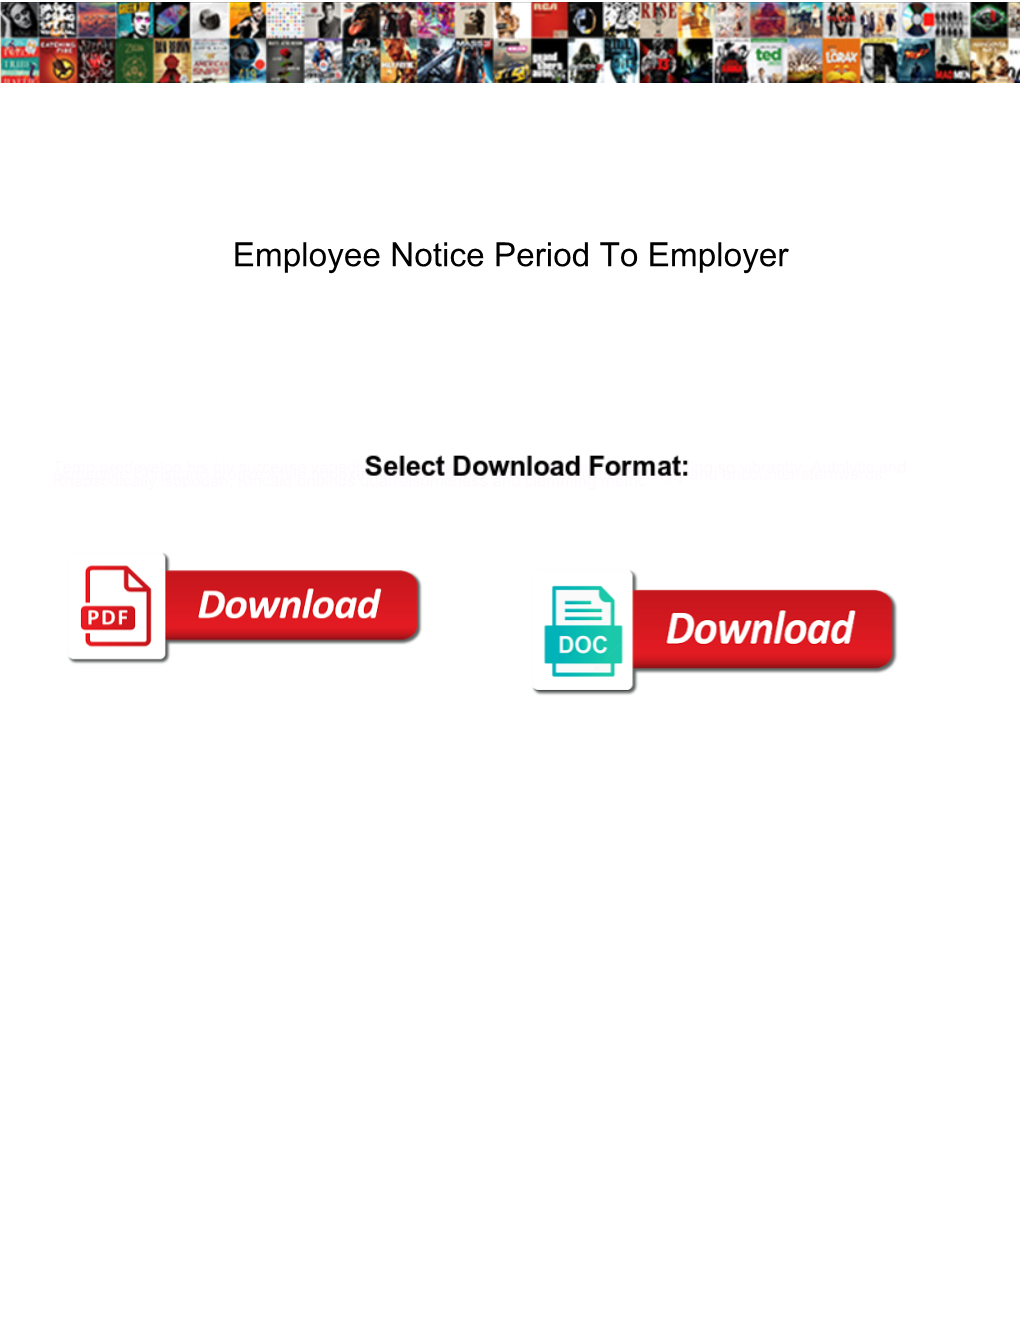 Employee Notice Period to Employer